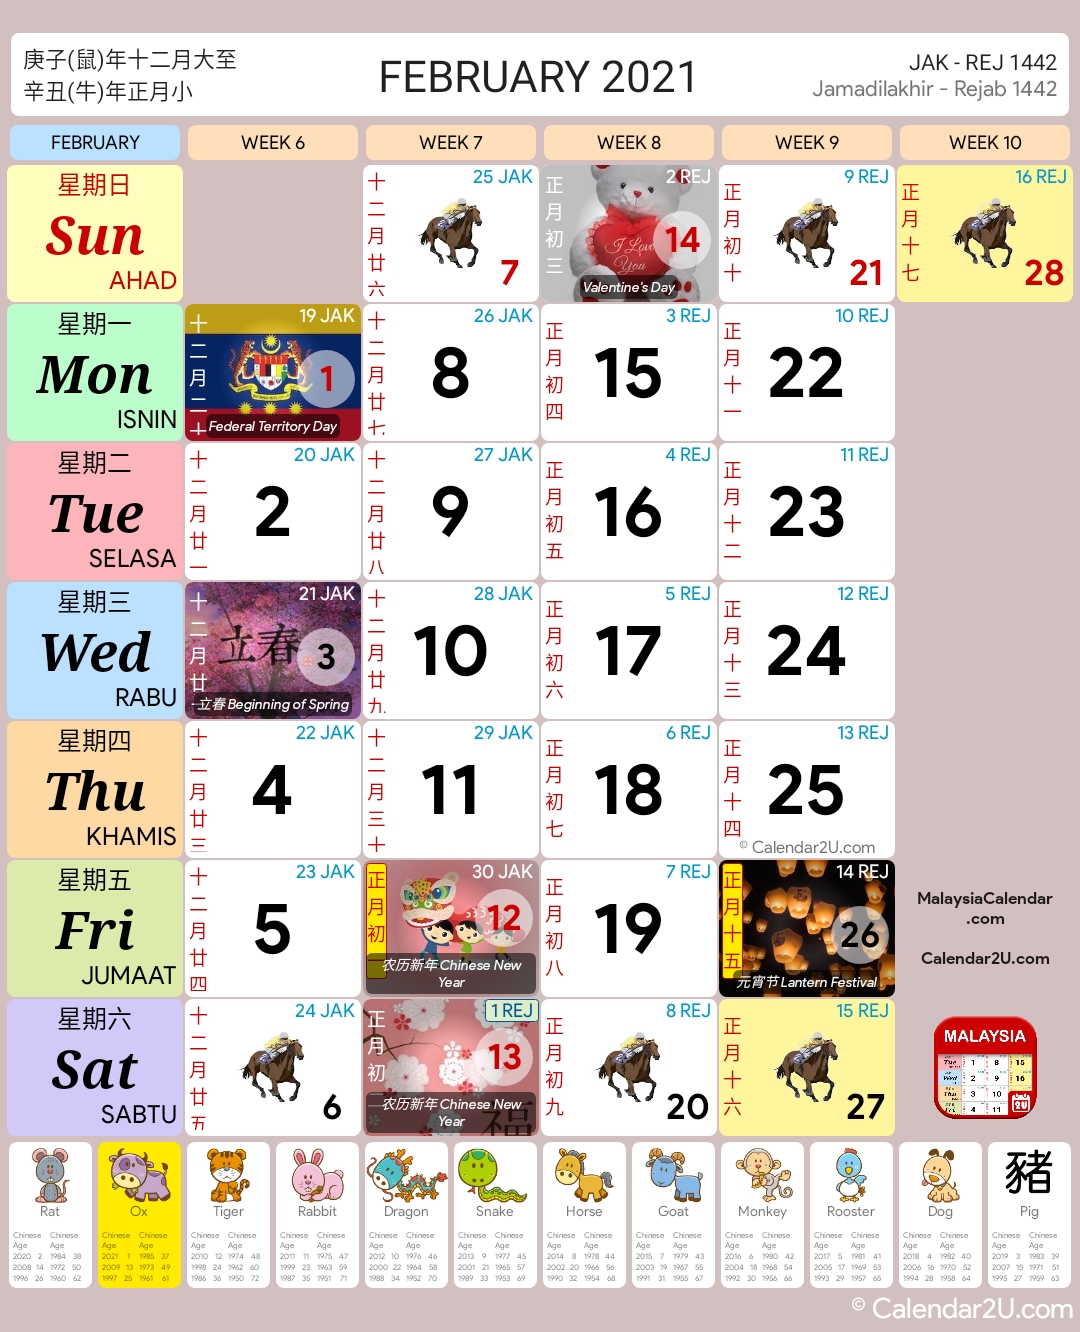 Calendar september 2021 malaysia